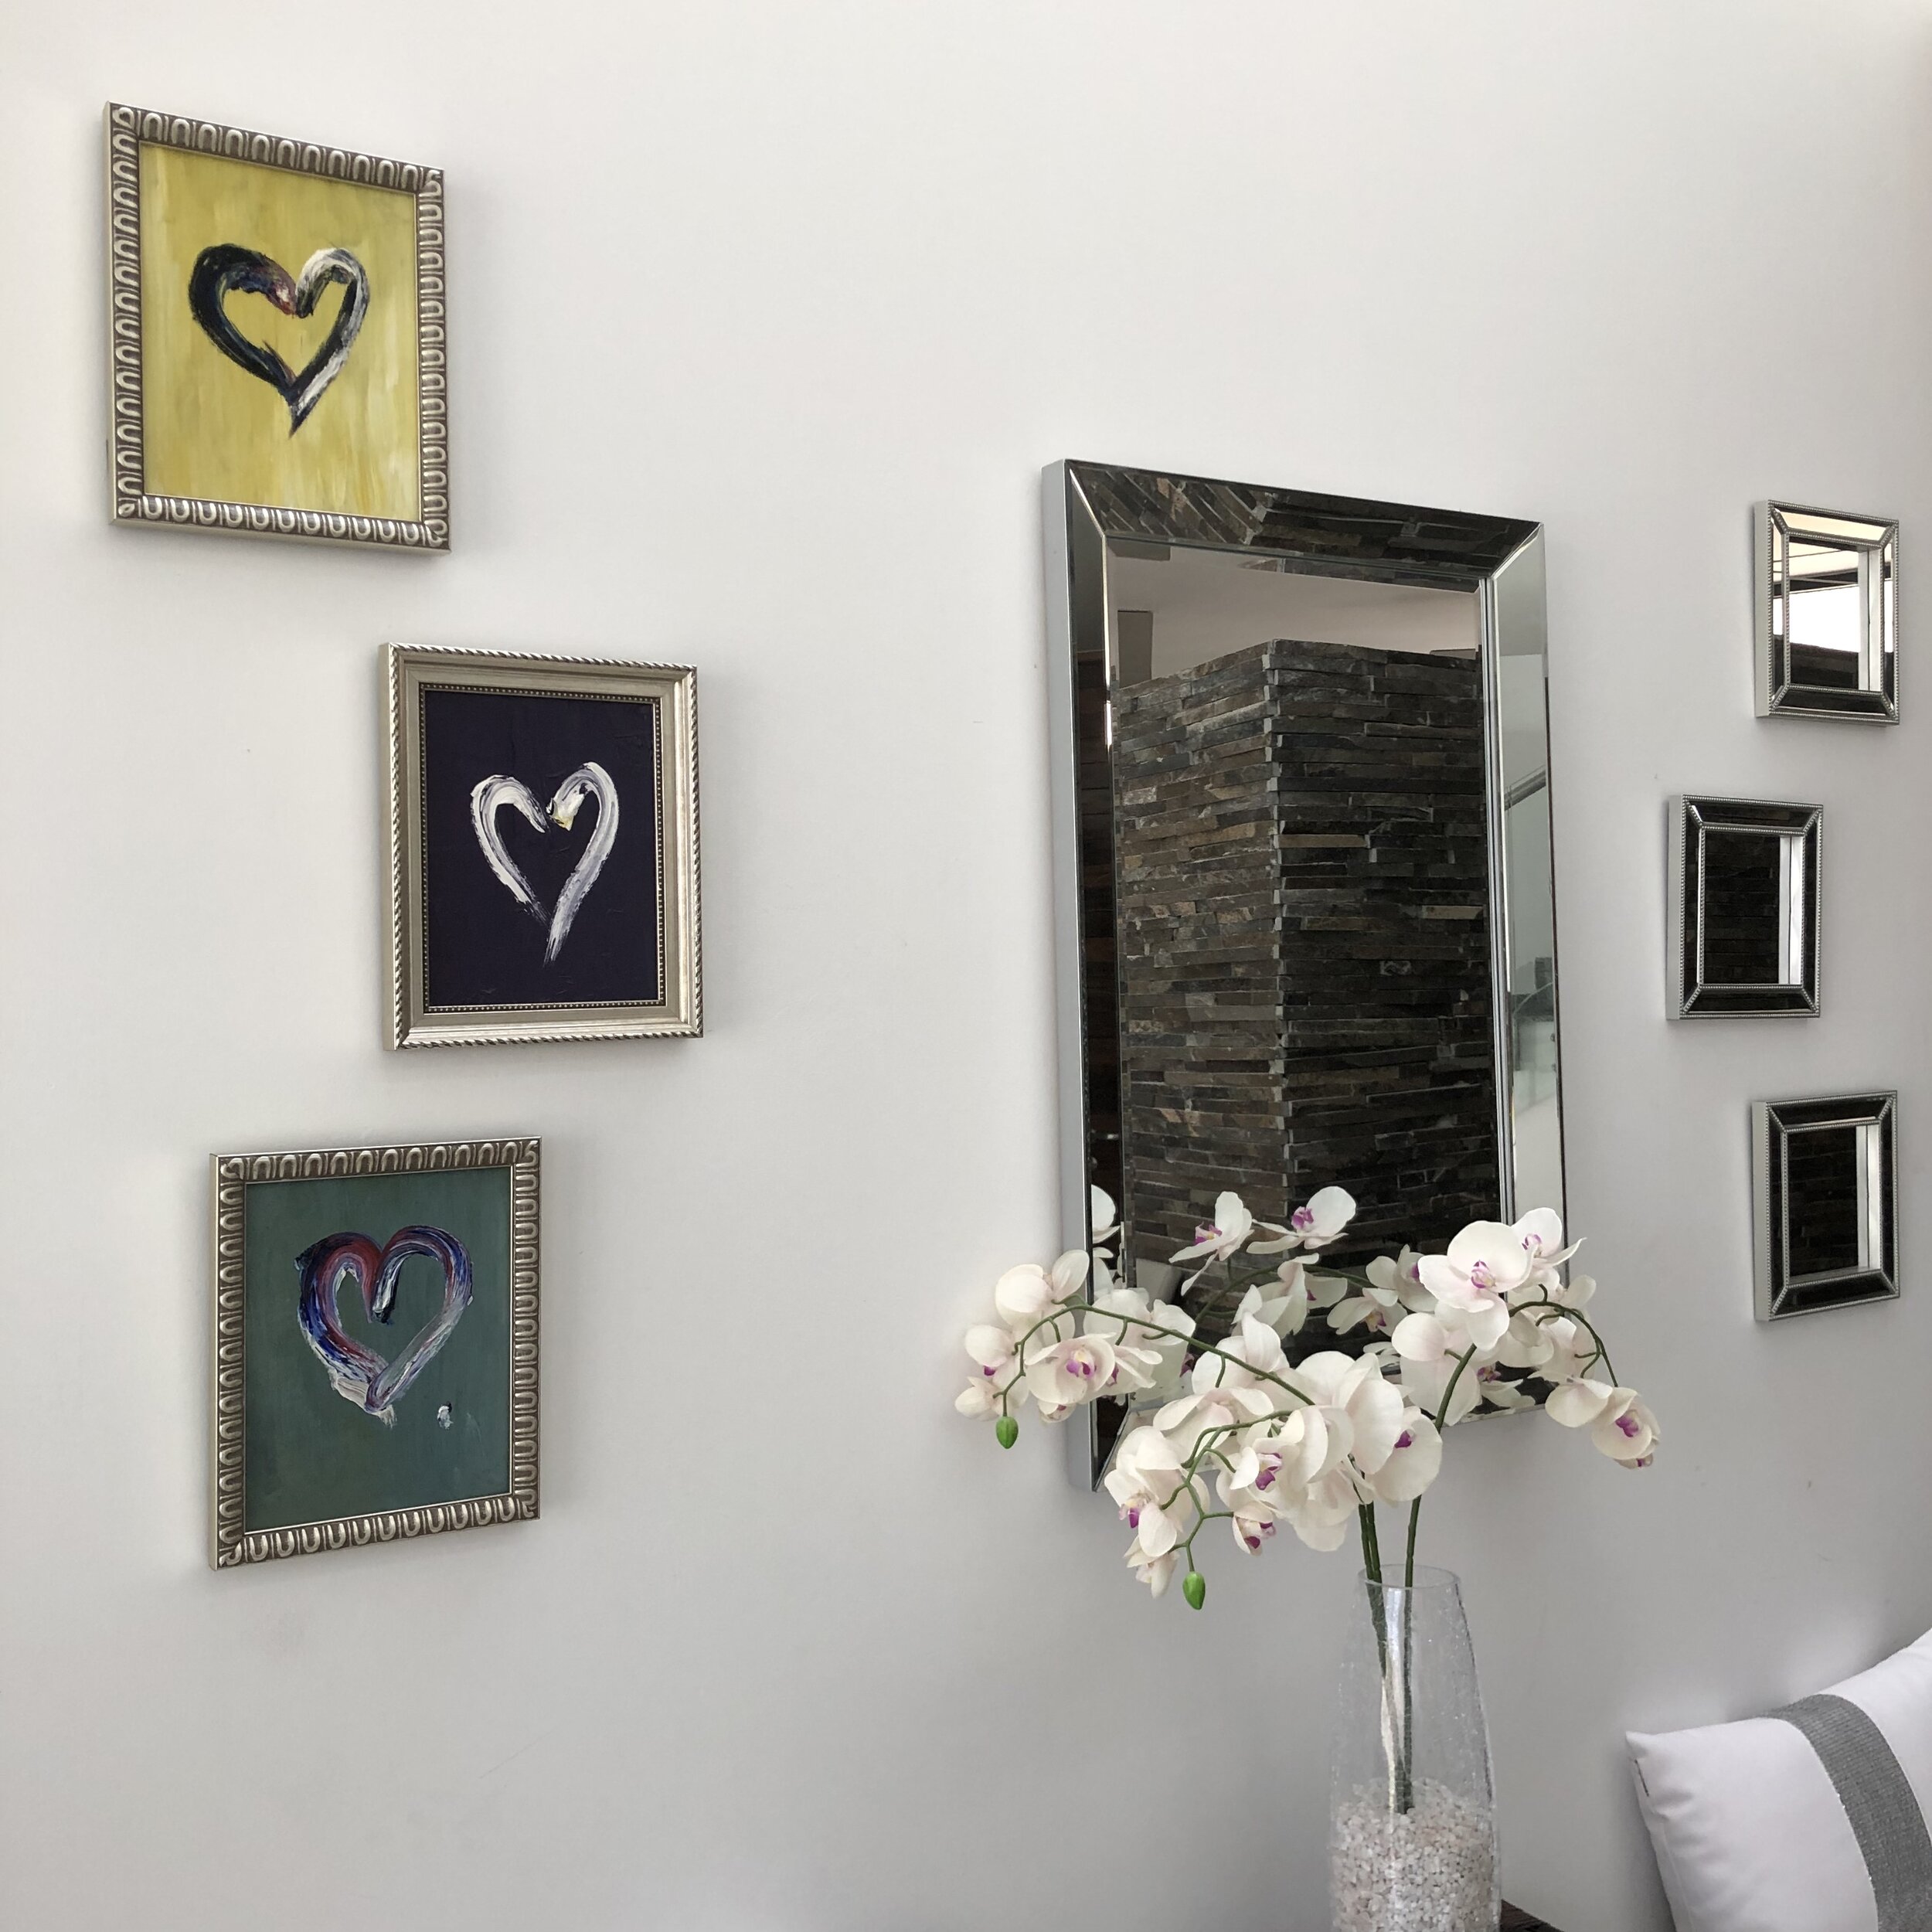 "3 My Hearts, 2019" Installation